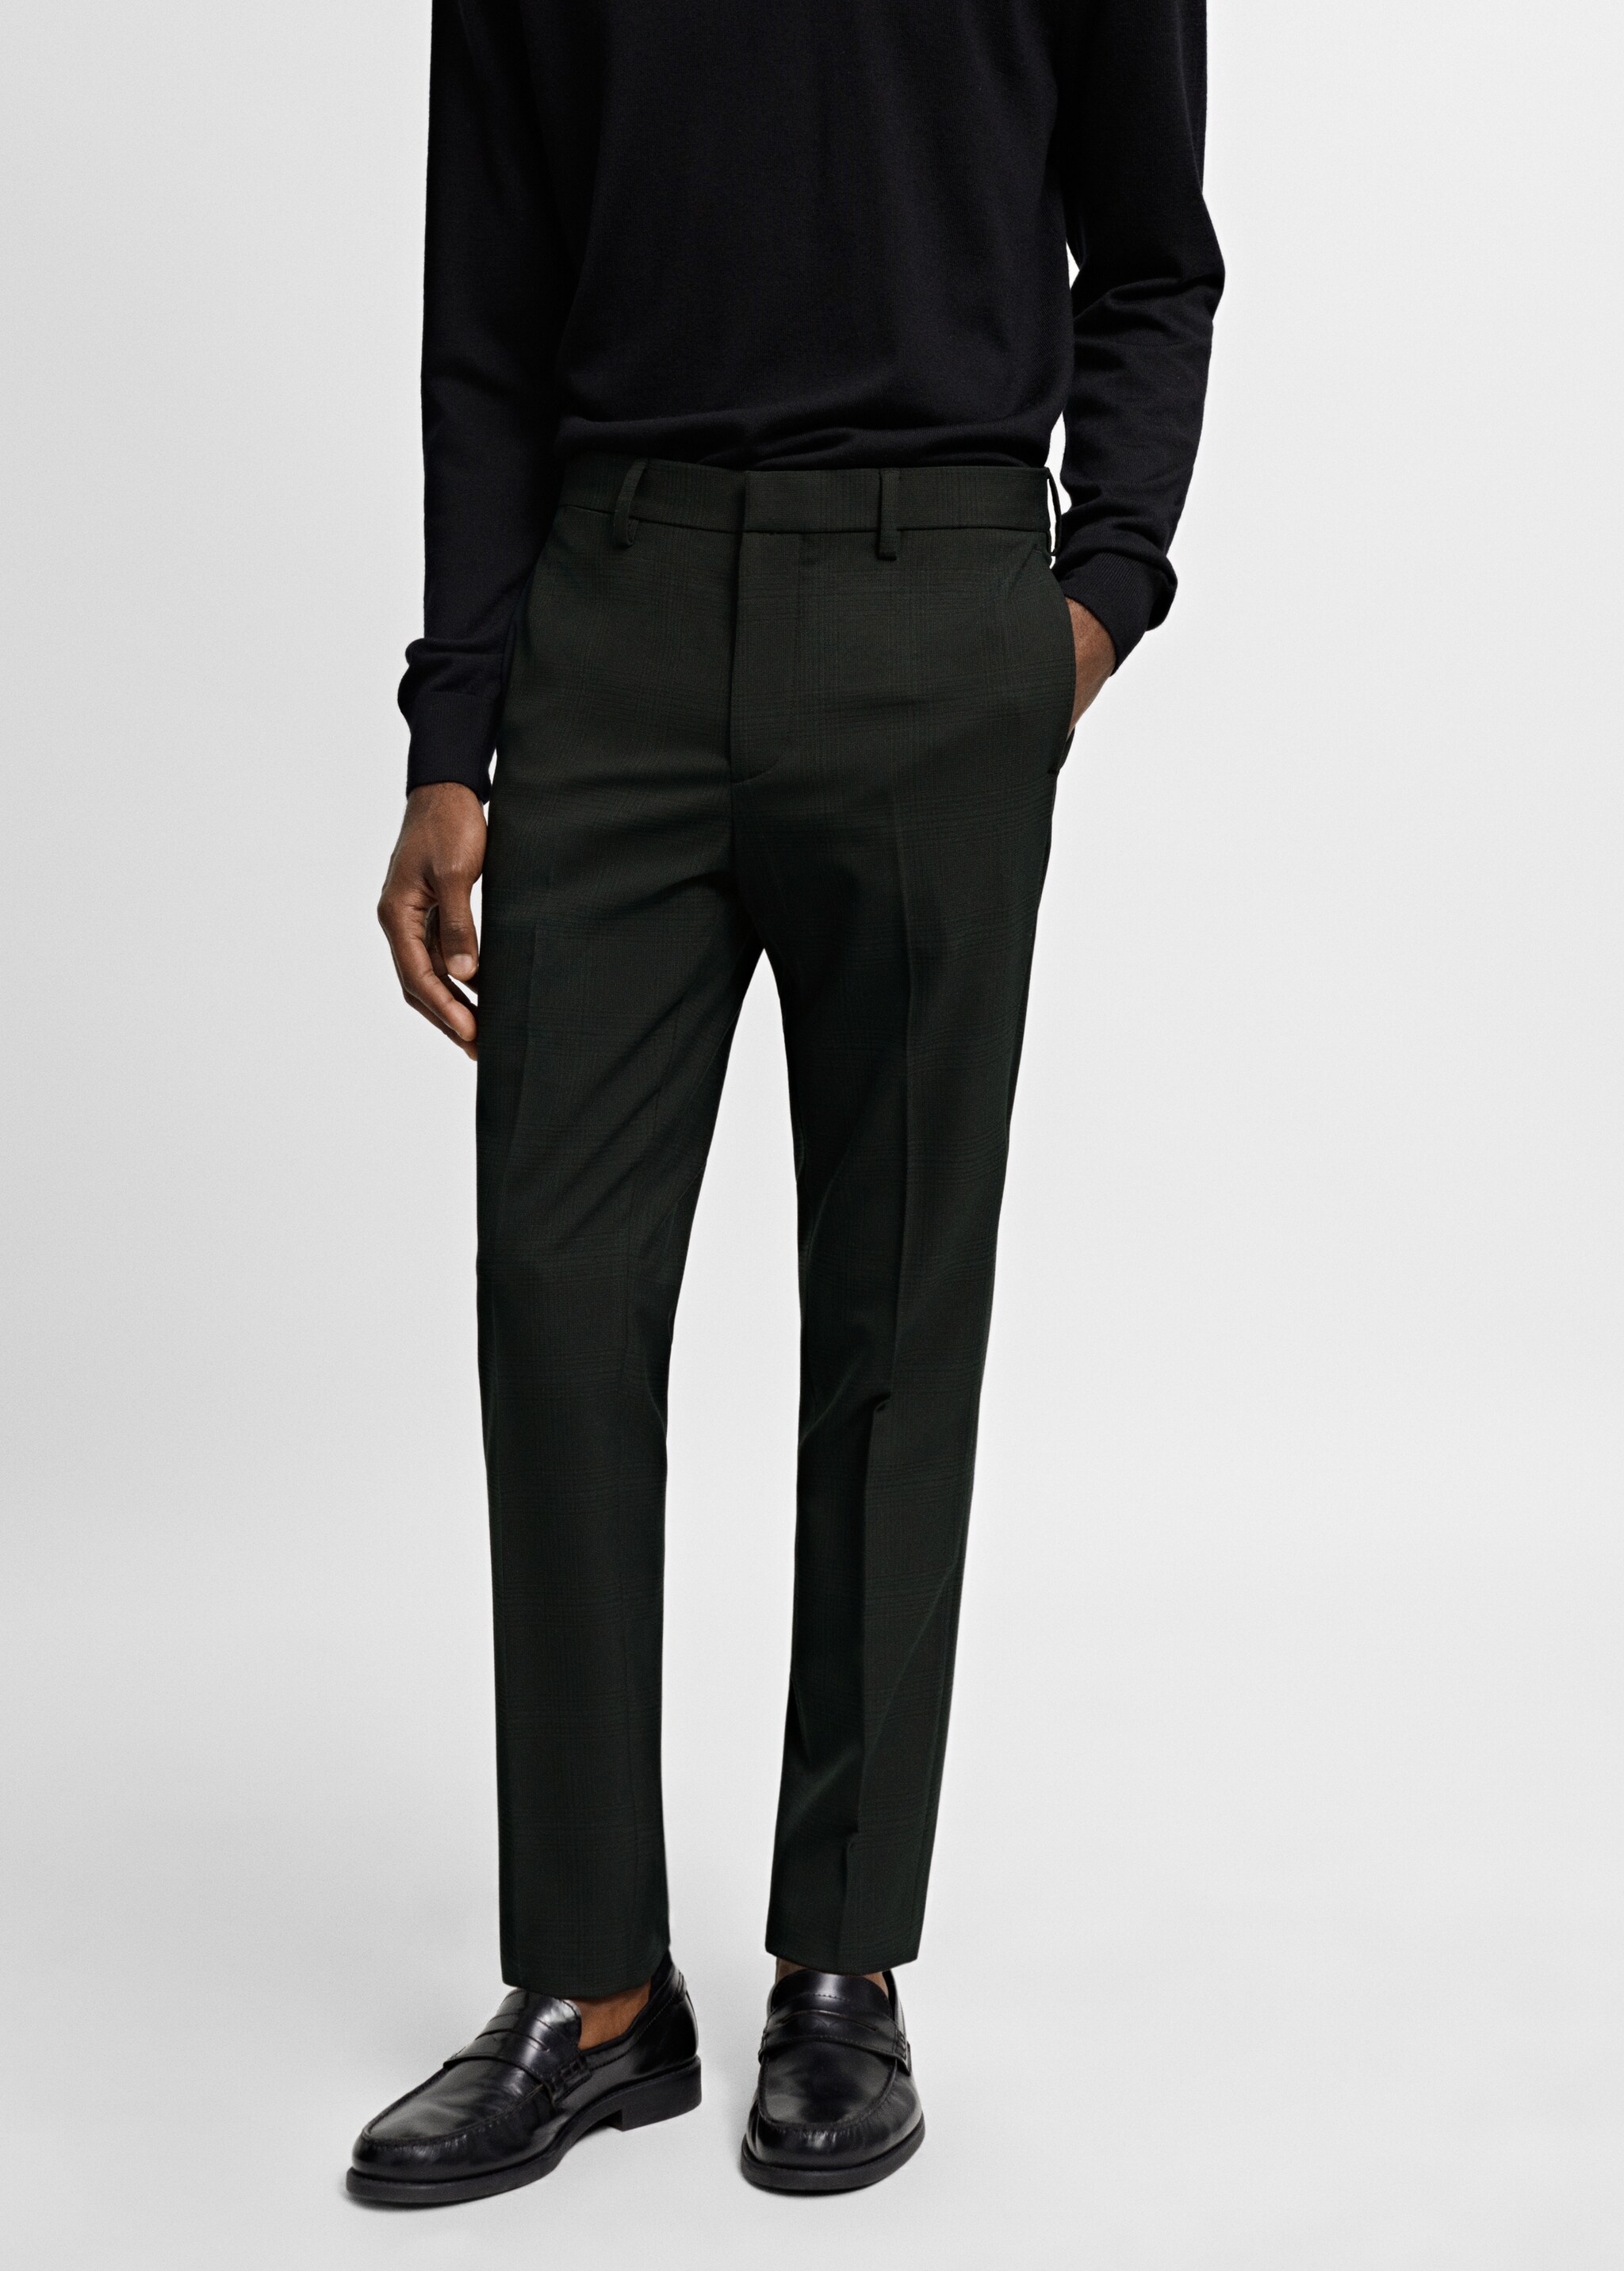 Stretch fabric super slim-fit suit pants - Medium plane